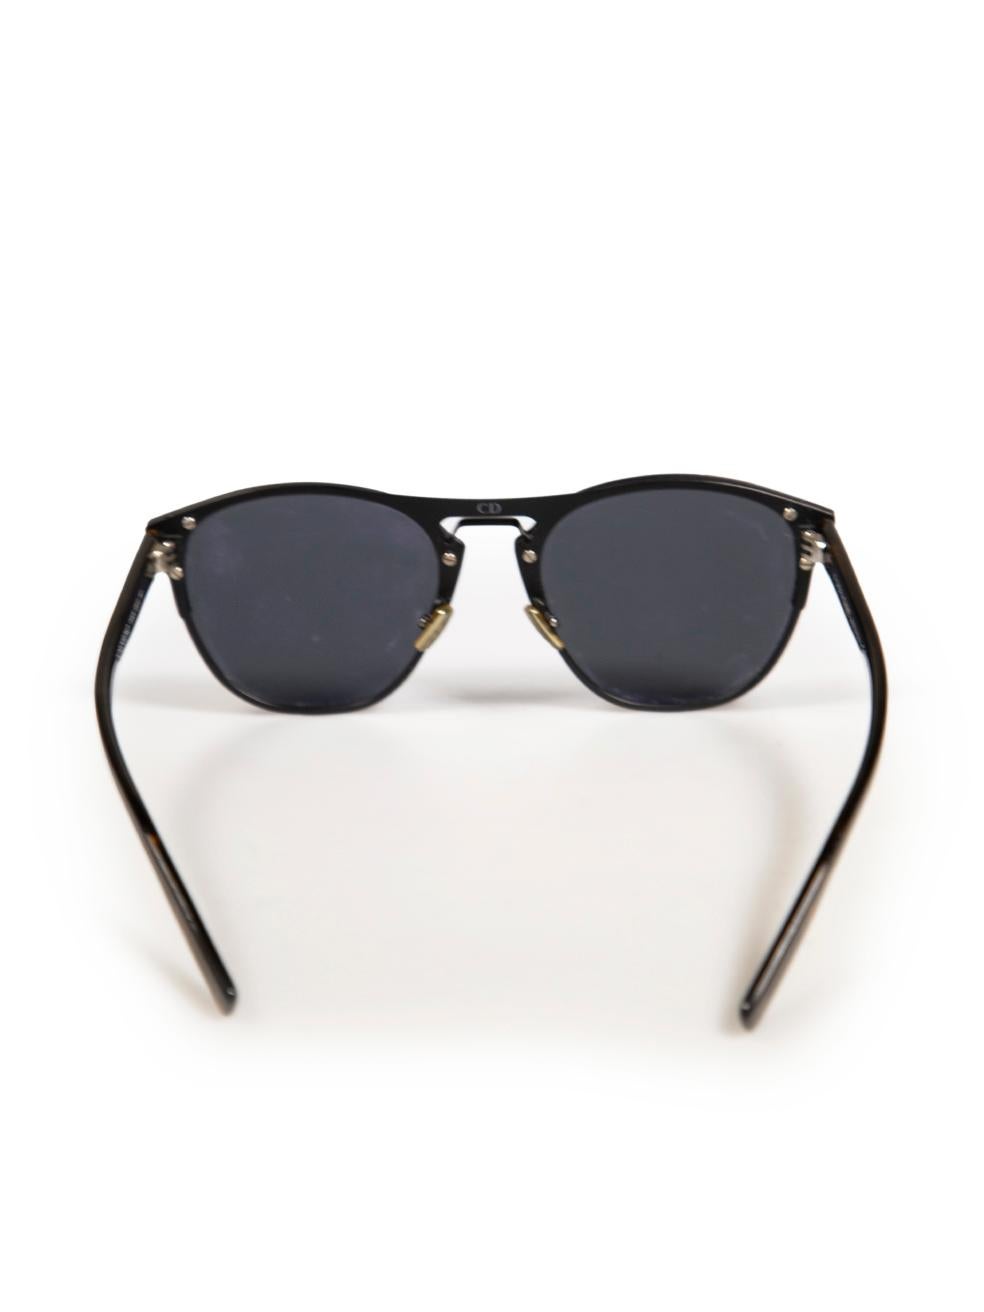 Dior Black Metal Diorchrono Sunglasses In Excellent Condition For Sale In London, GB